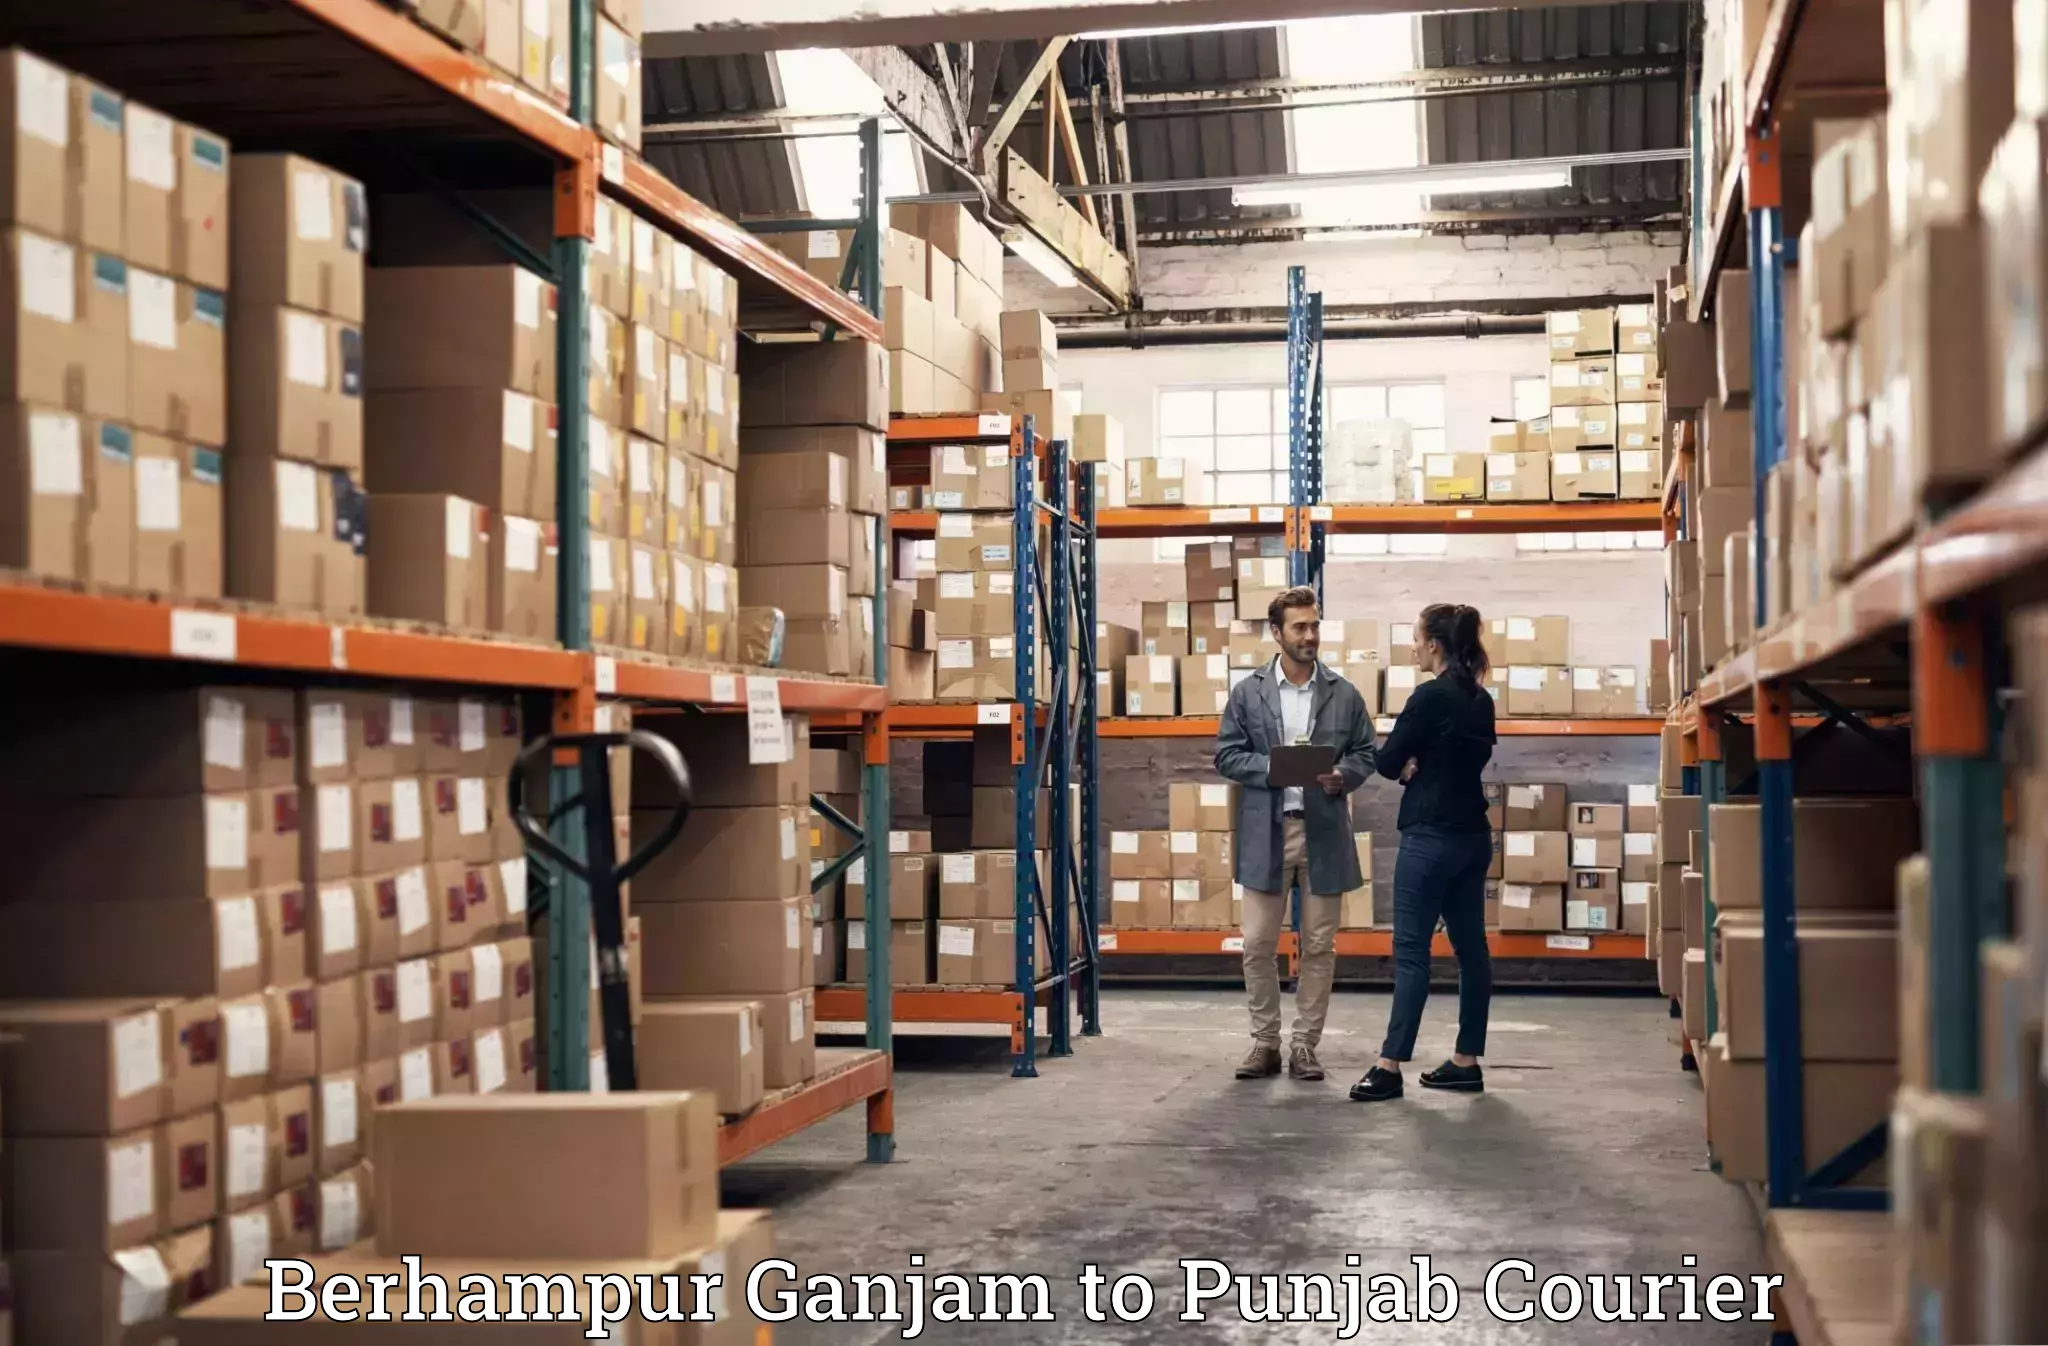 Moving and packing experts Berhampur Ganjam to Punjab